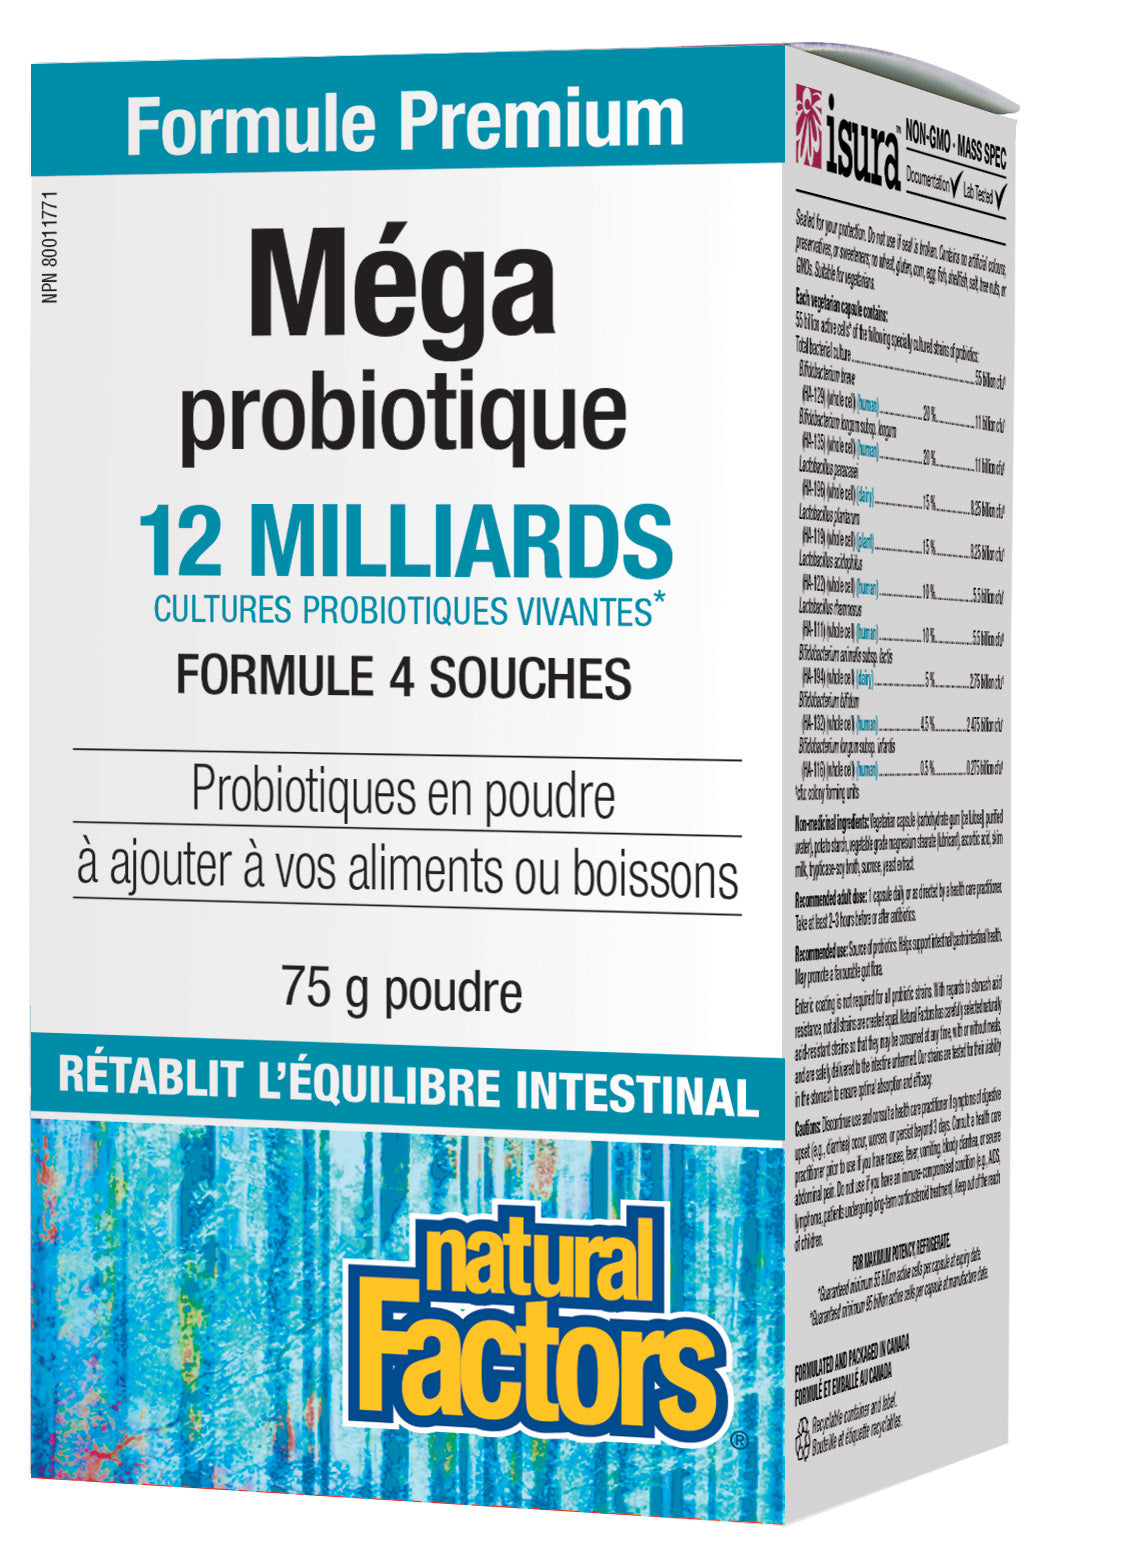 Mega probiotic poudre (12 milliards) 75g